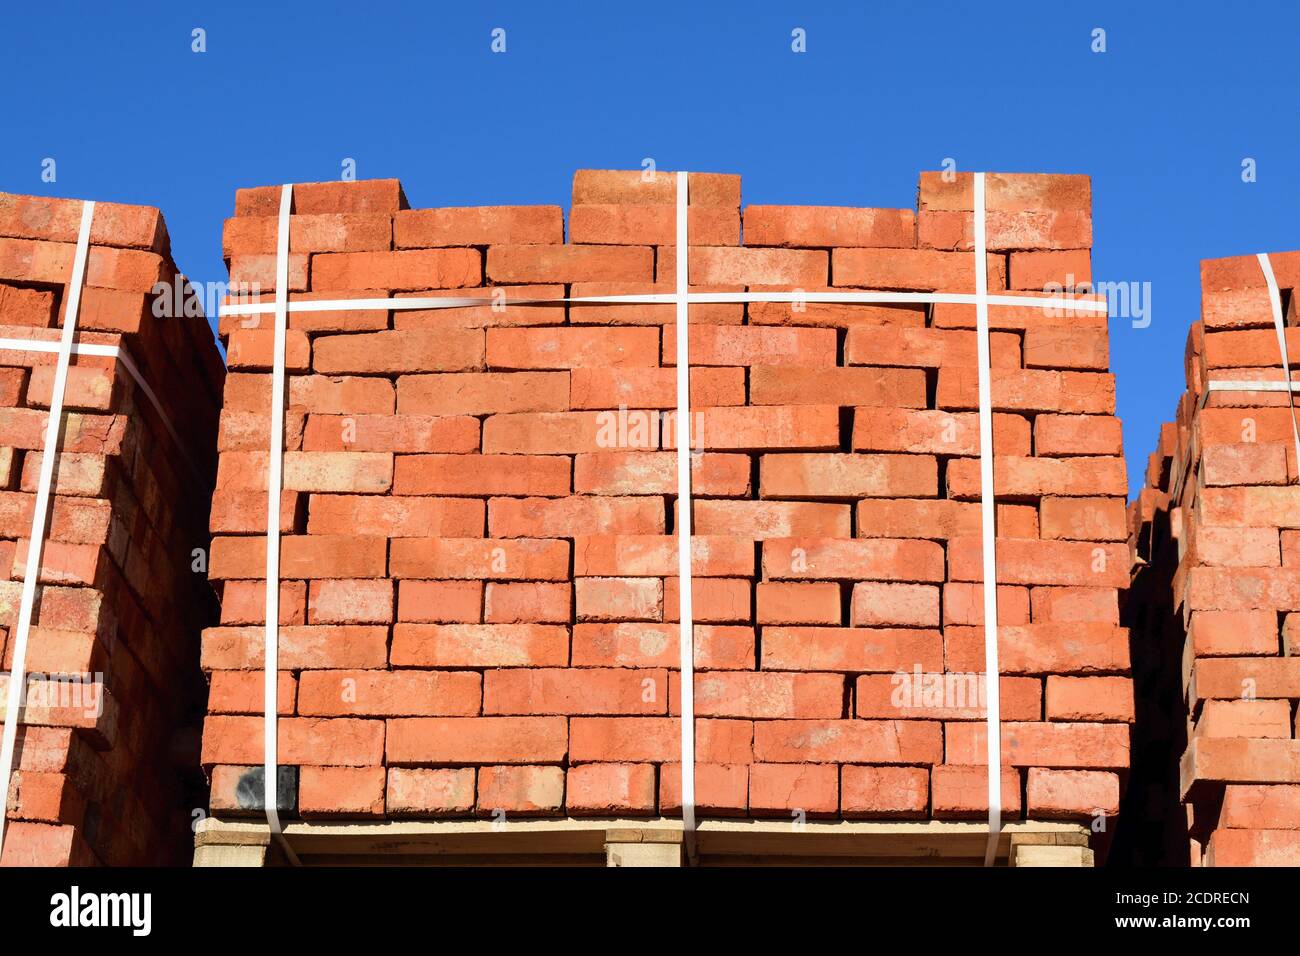 Shpilmaster Construction Stacking Building Red Brick Block